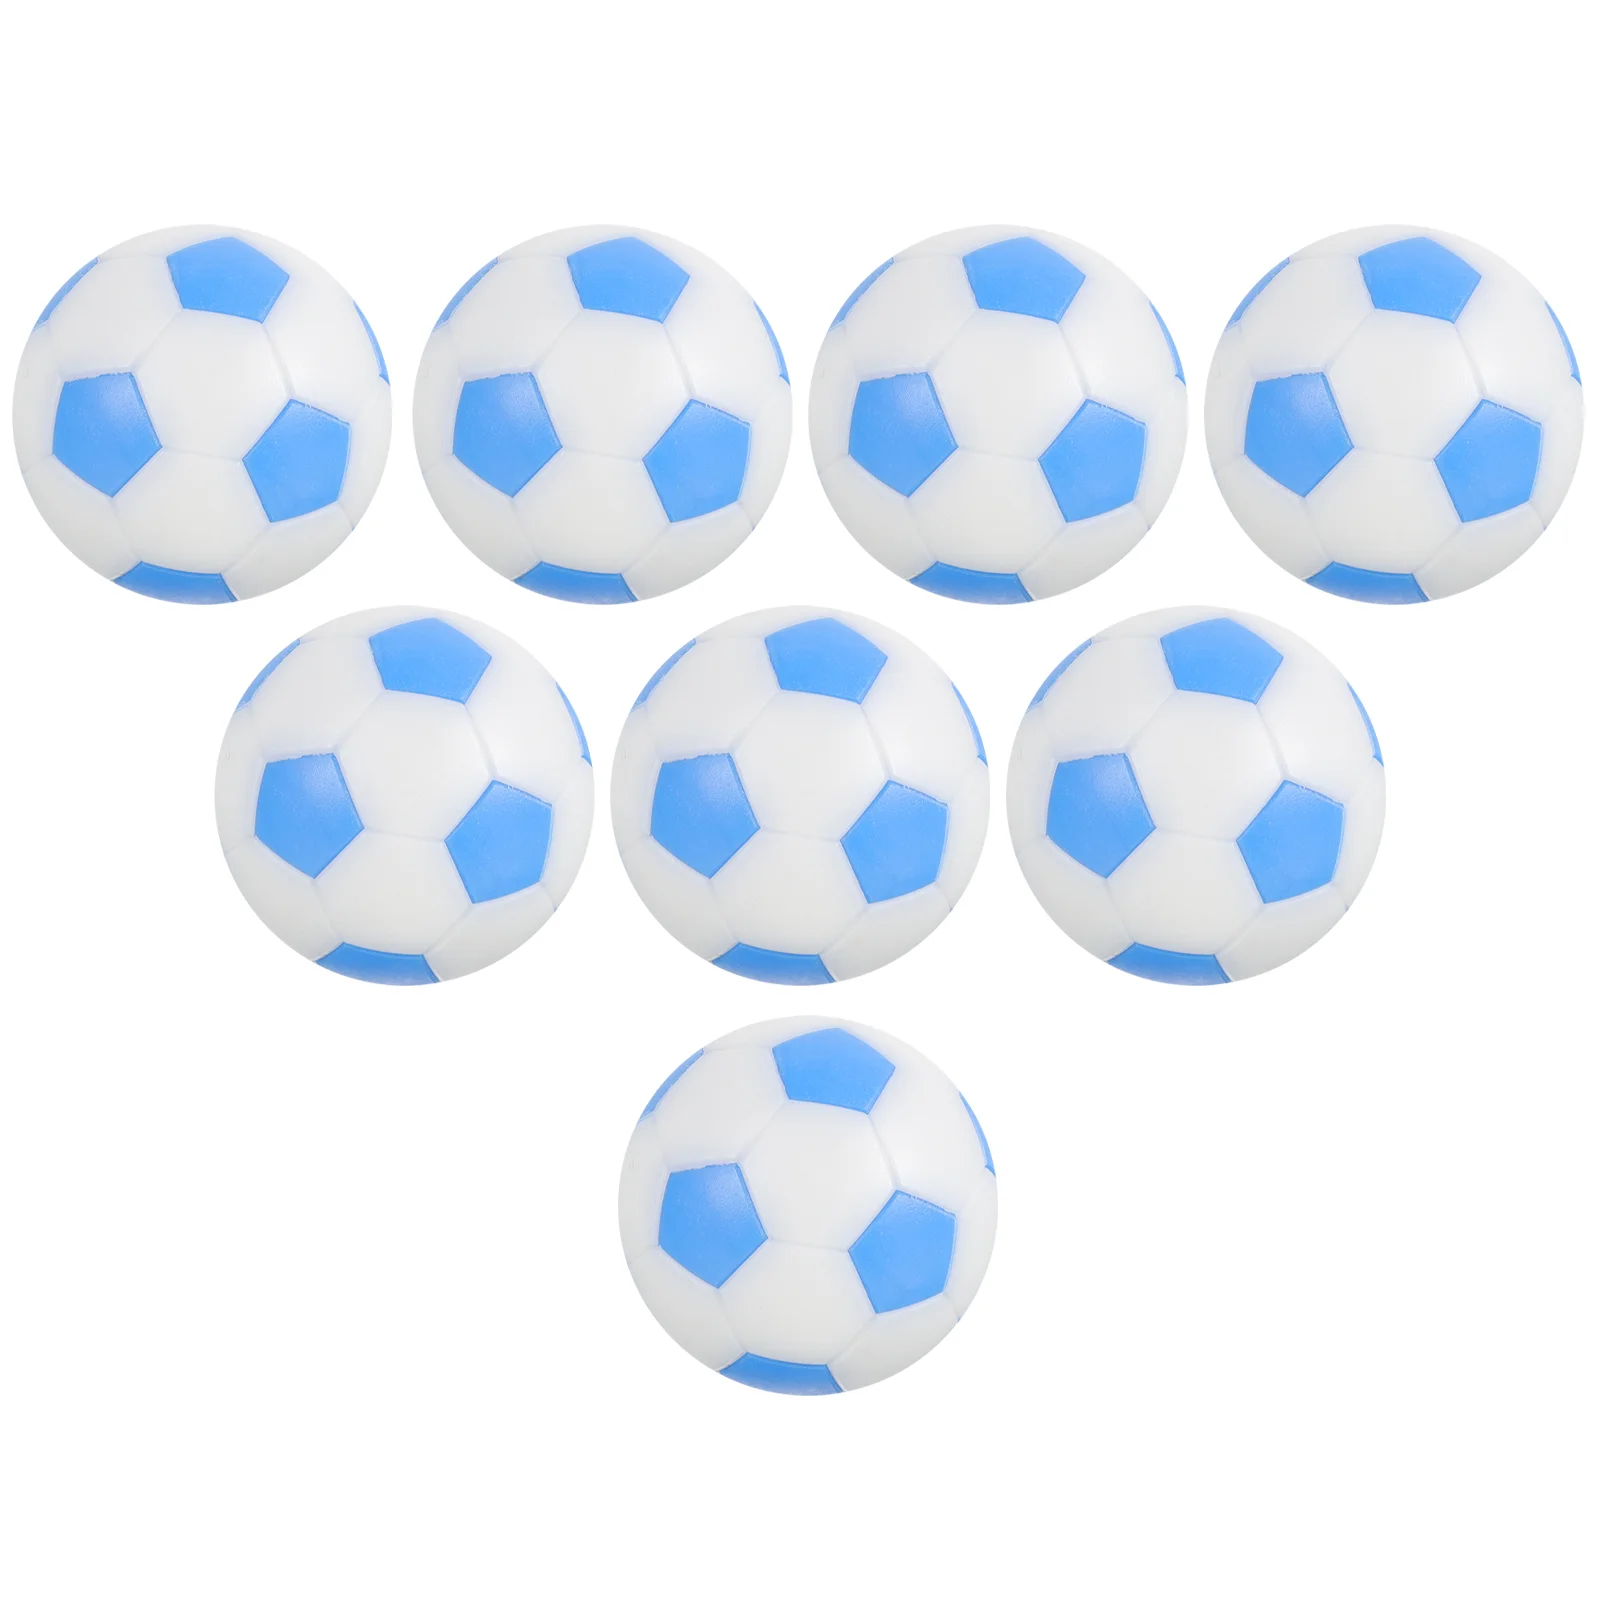 

8pcs Foosball Balls Tabletop Foosball Mini Balls Soccer Replacement Balls Tabletop Game Balls